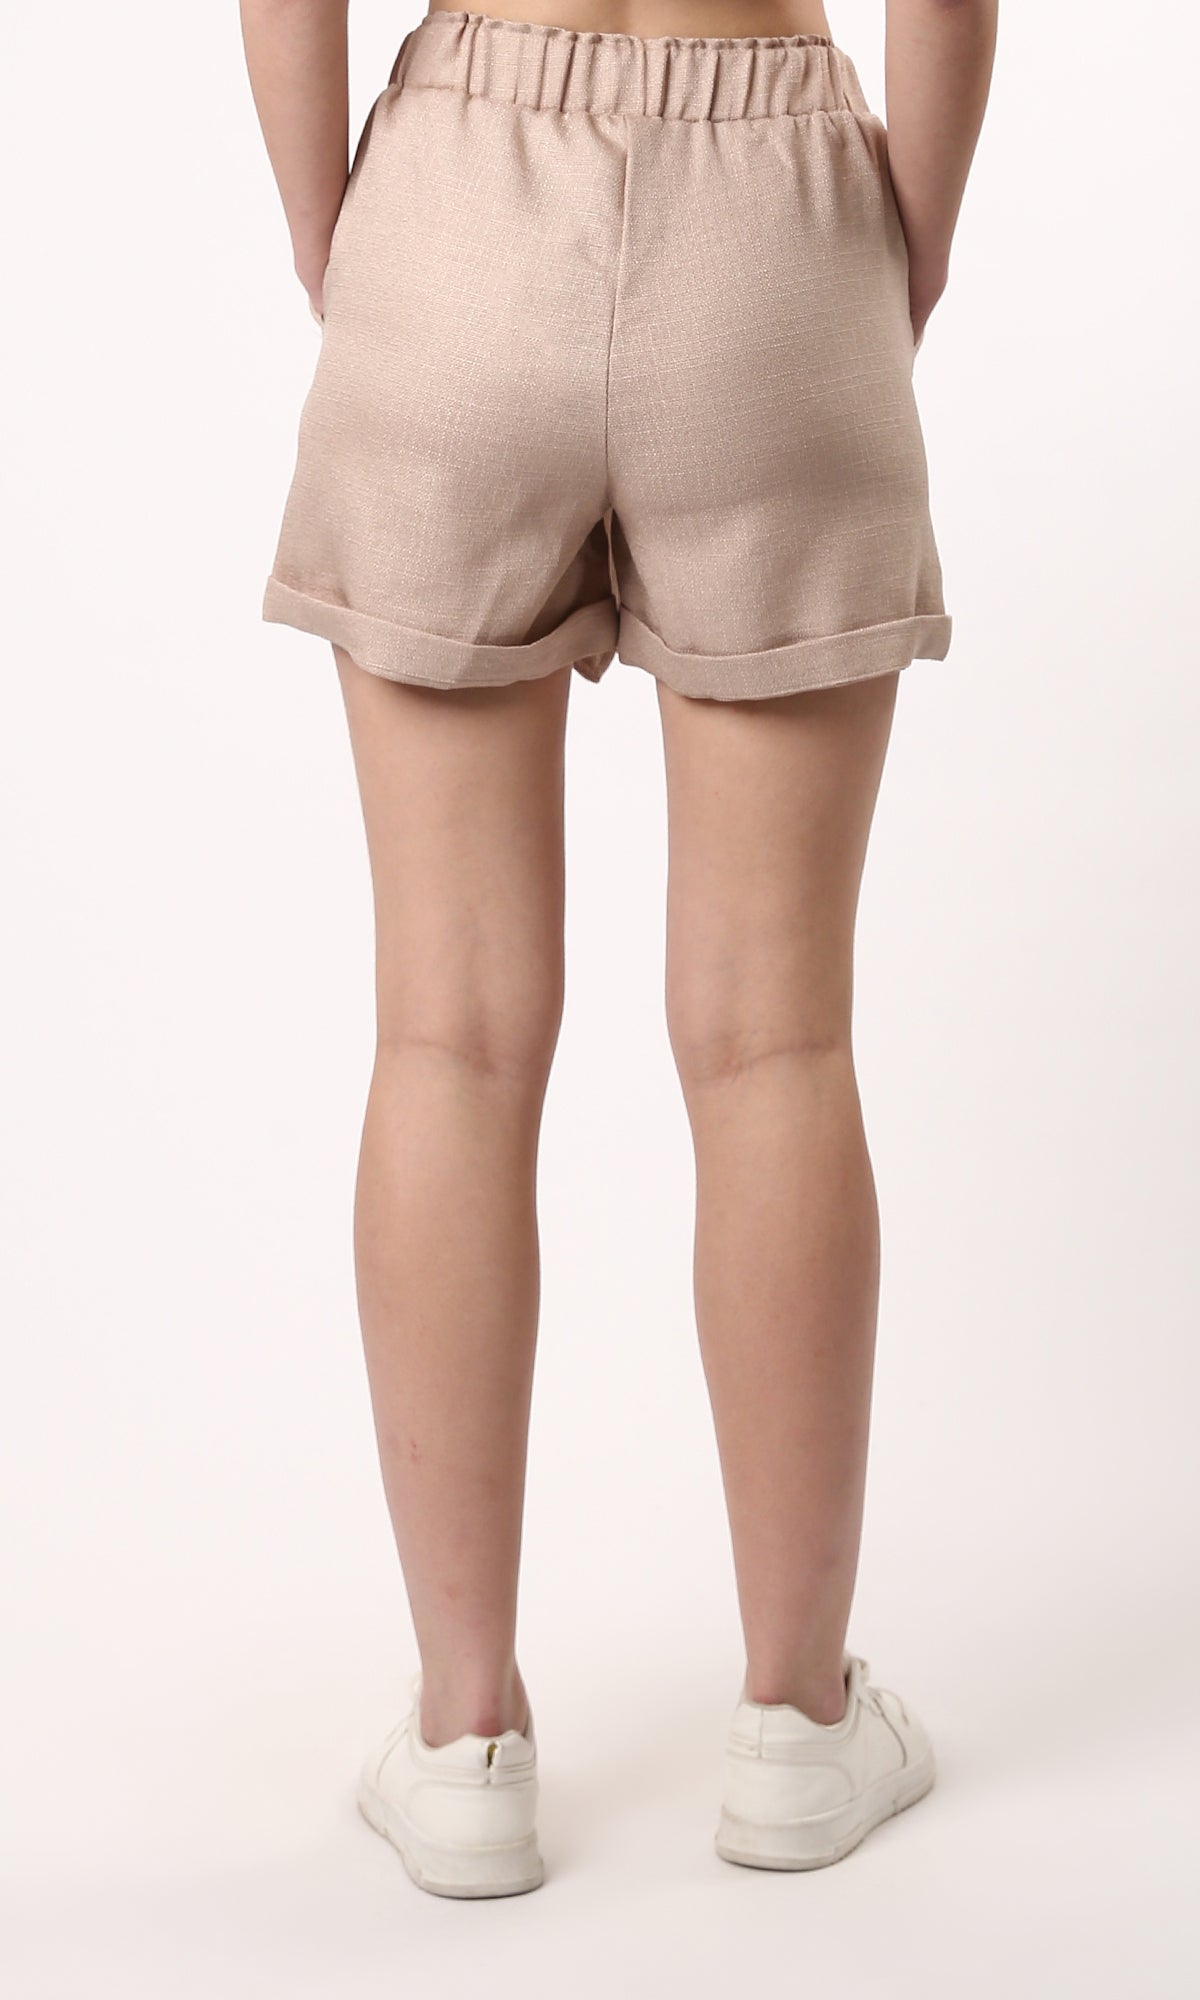 O179432 Slip On Patterned Light Coffee Summer Shorts